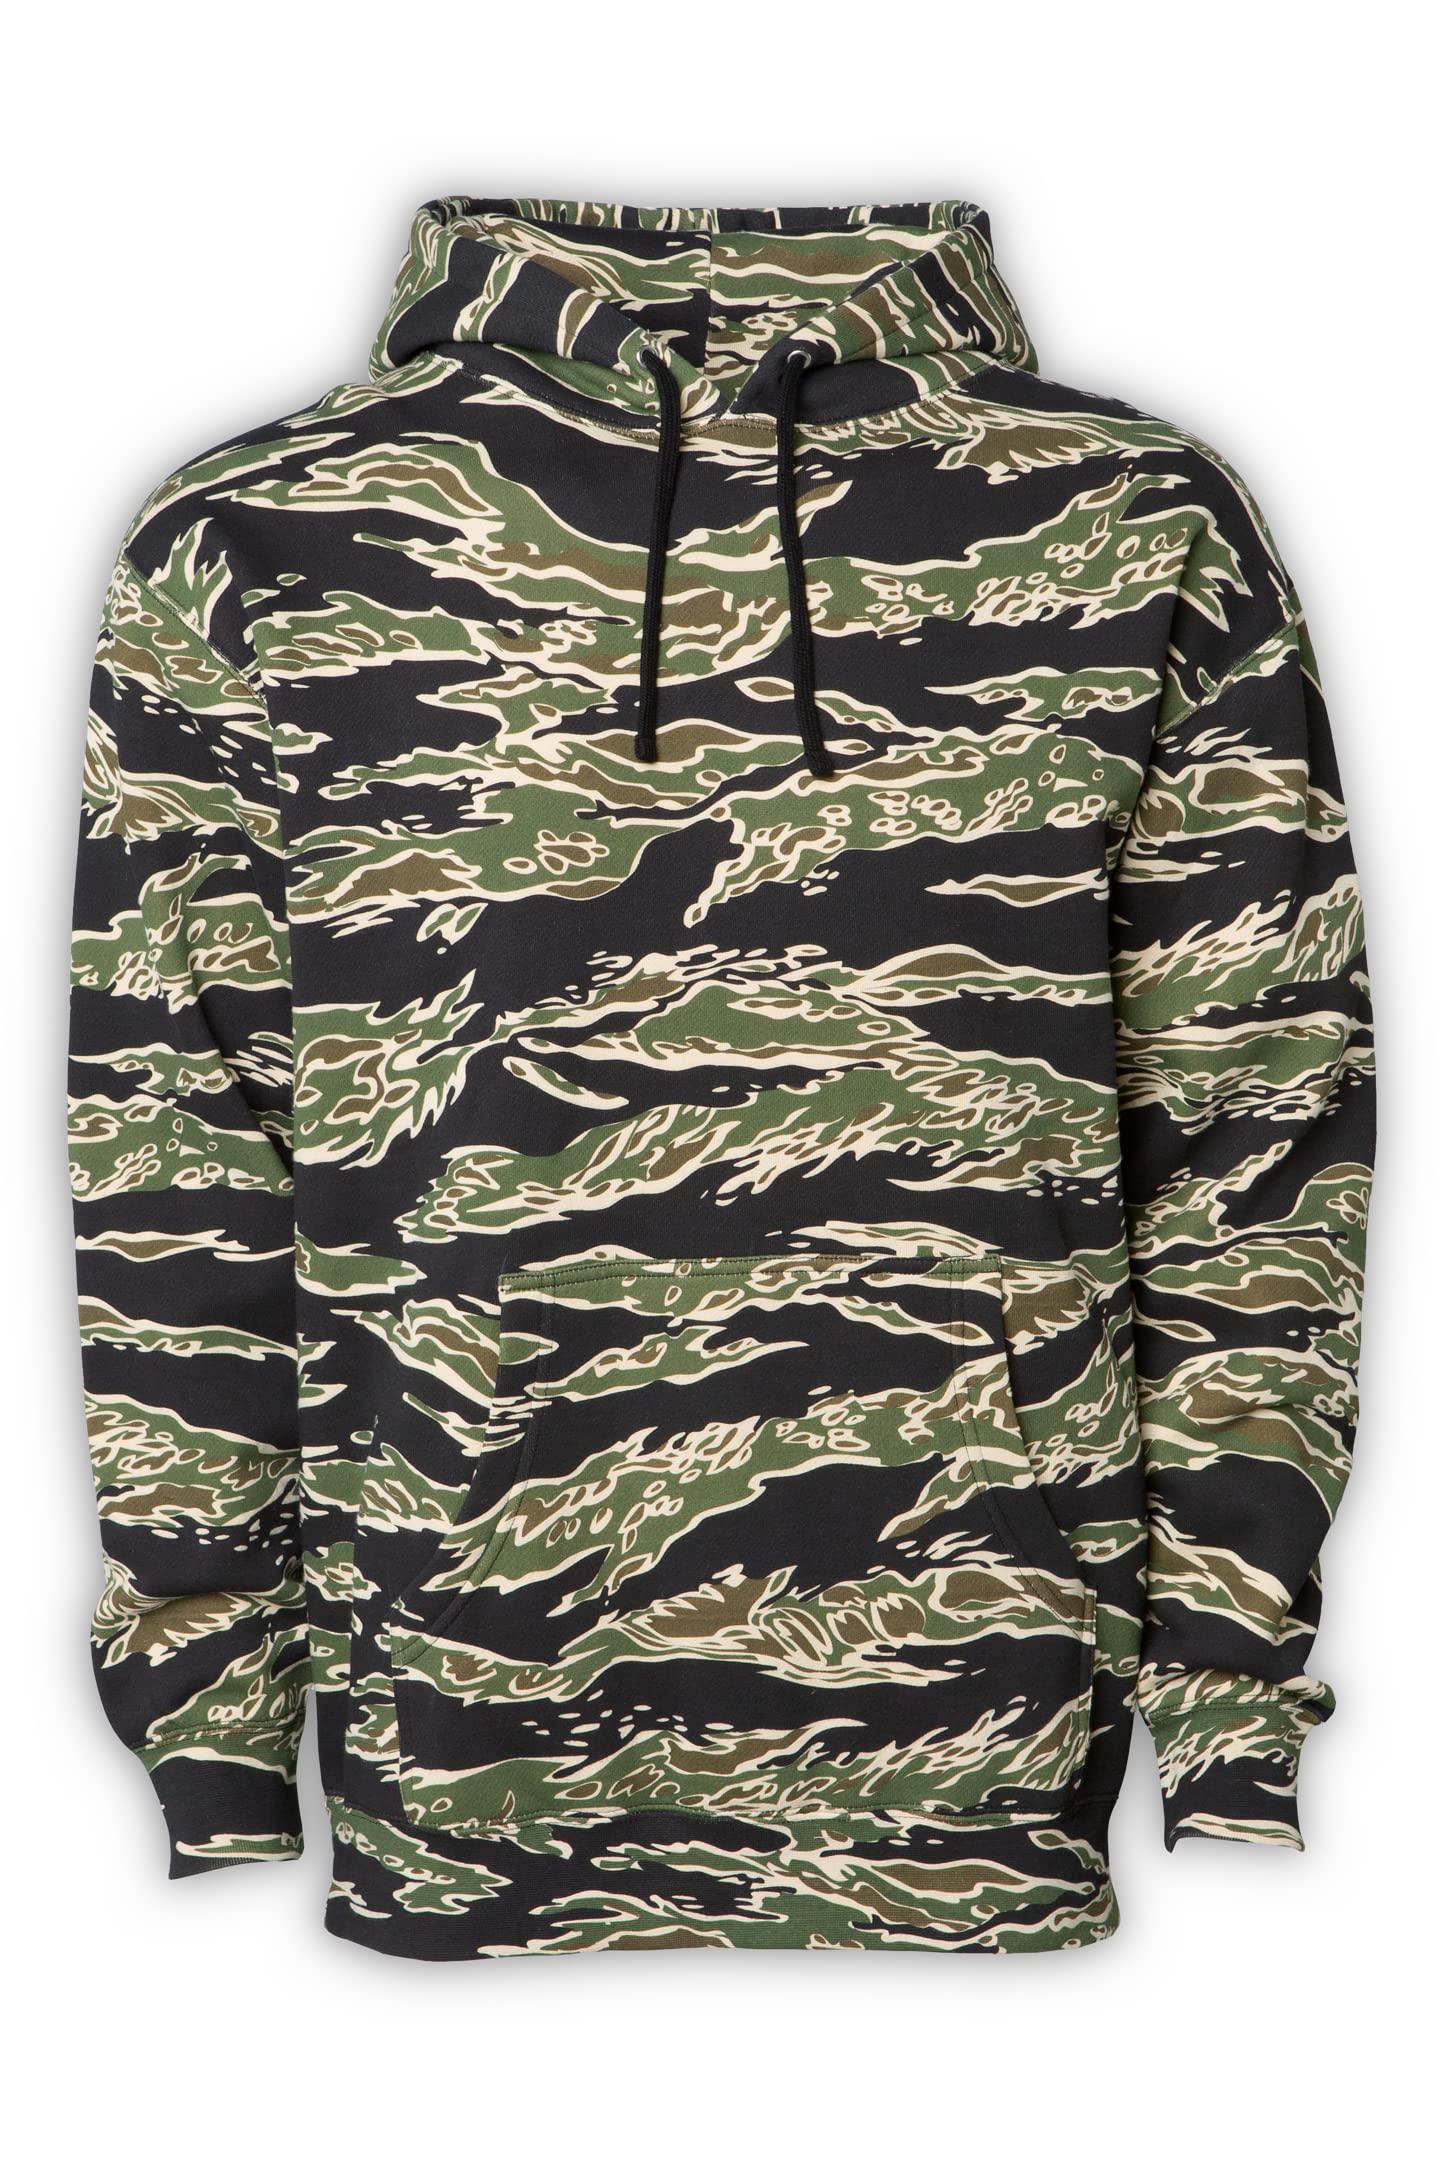 ShirtBANC Camouflage Sweater Unisex Blank Sweatshirts Camo Hoodies, XS-3XL